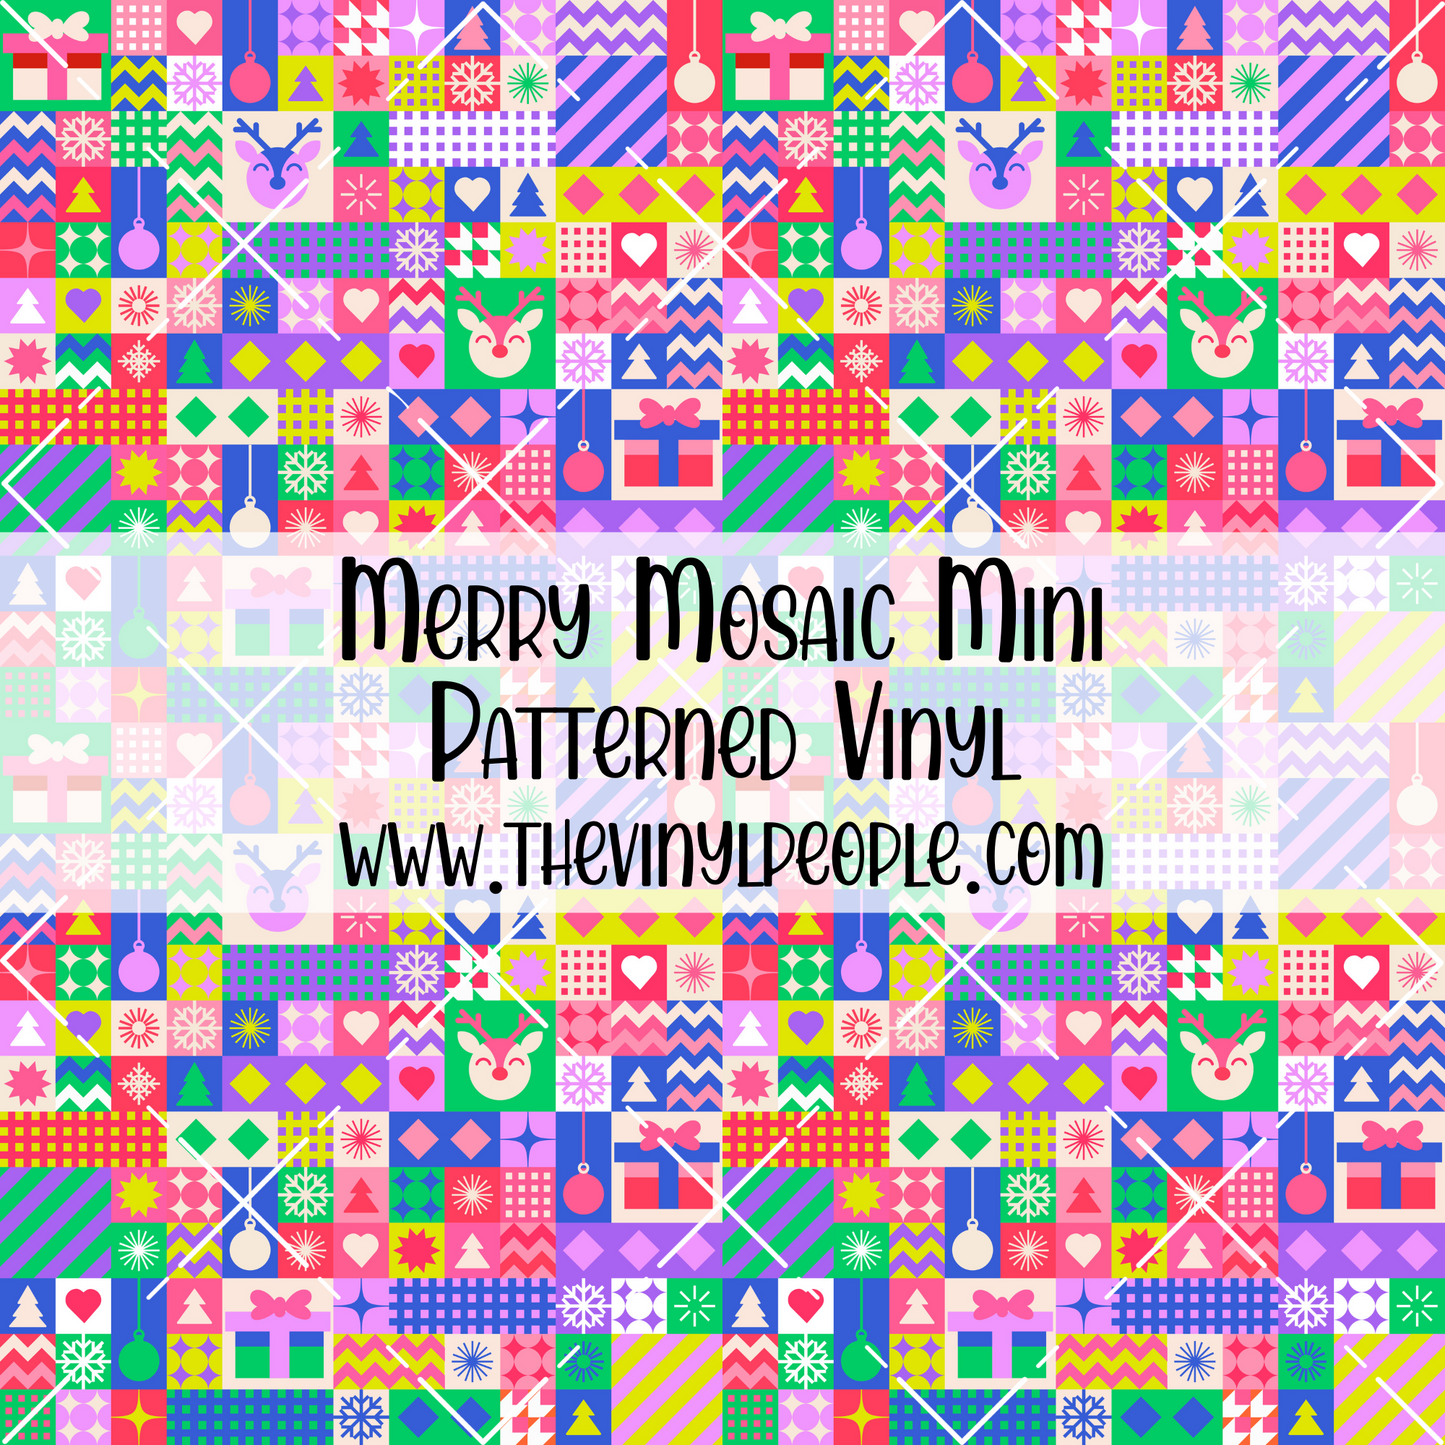 Merry Mosaic Patterned Vinyl